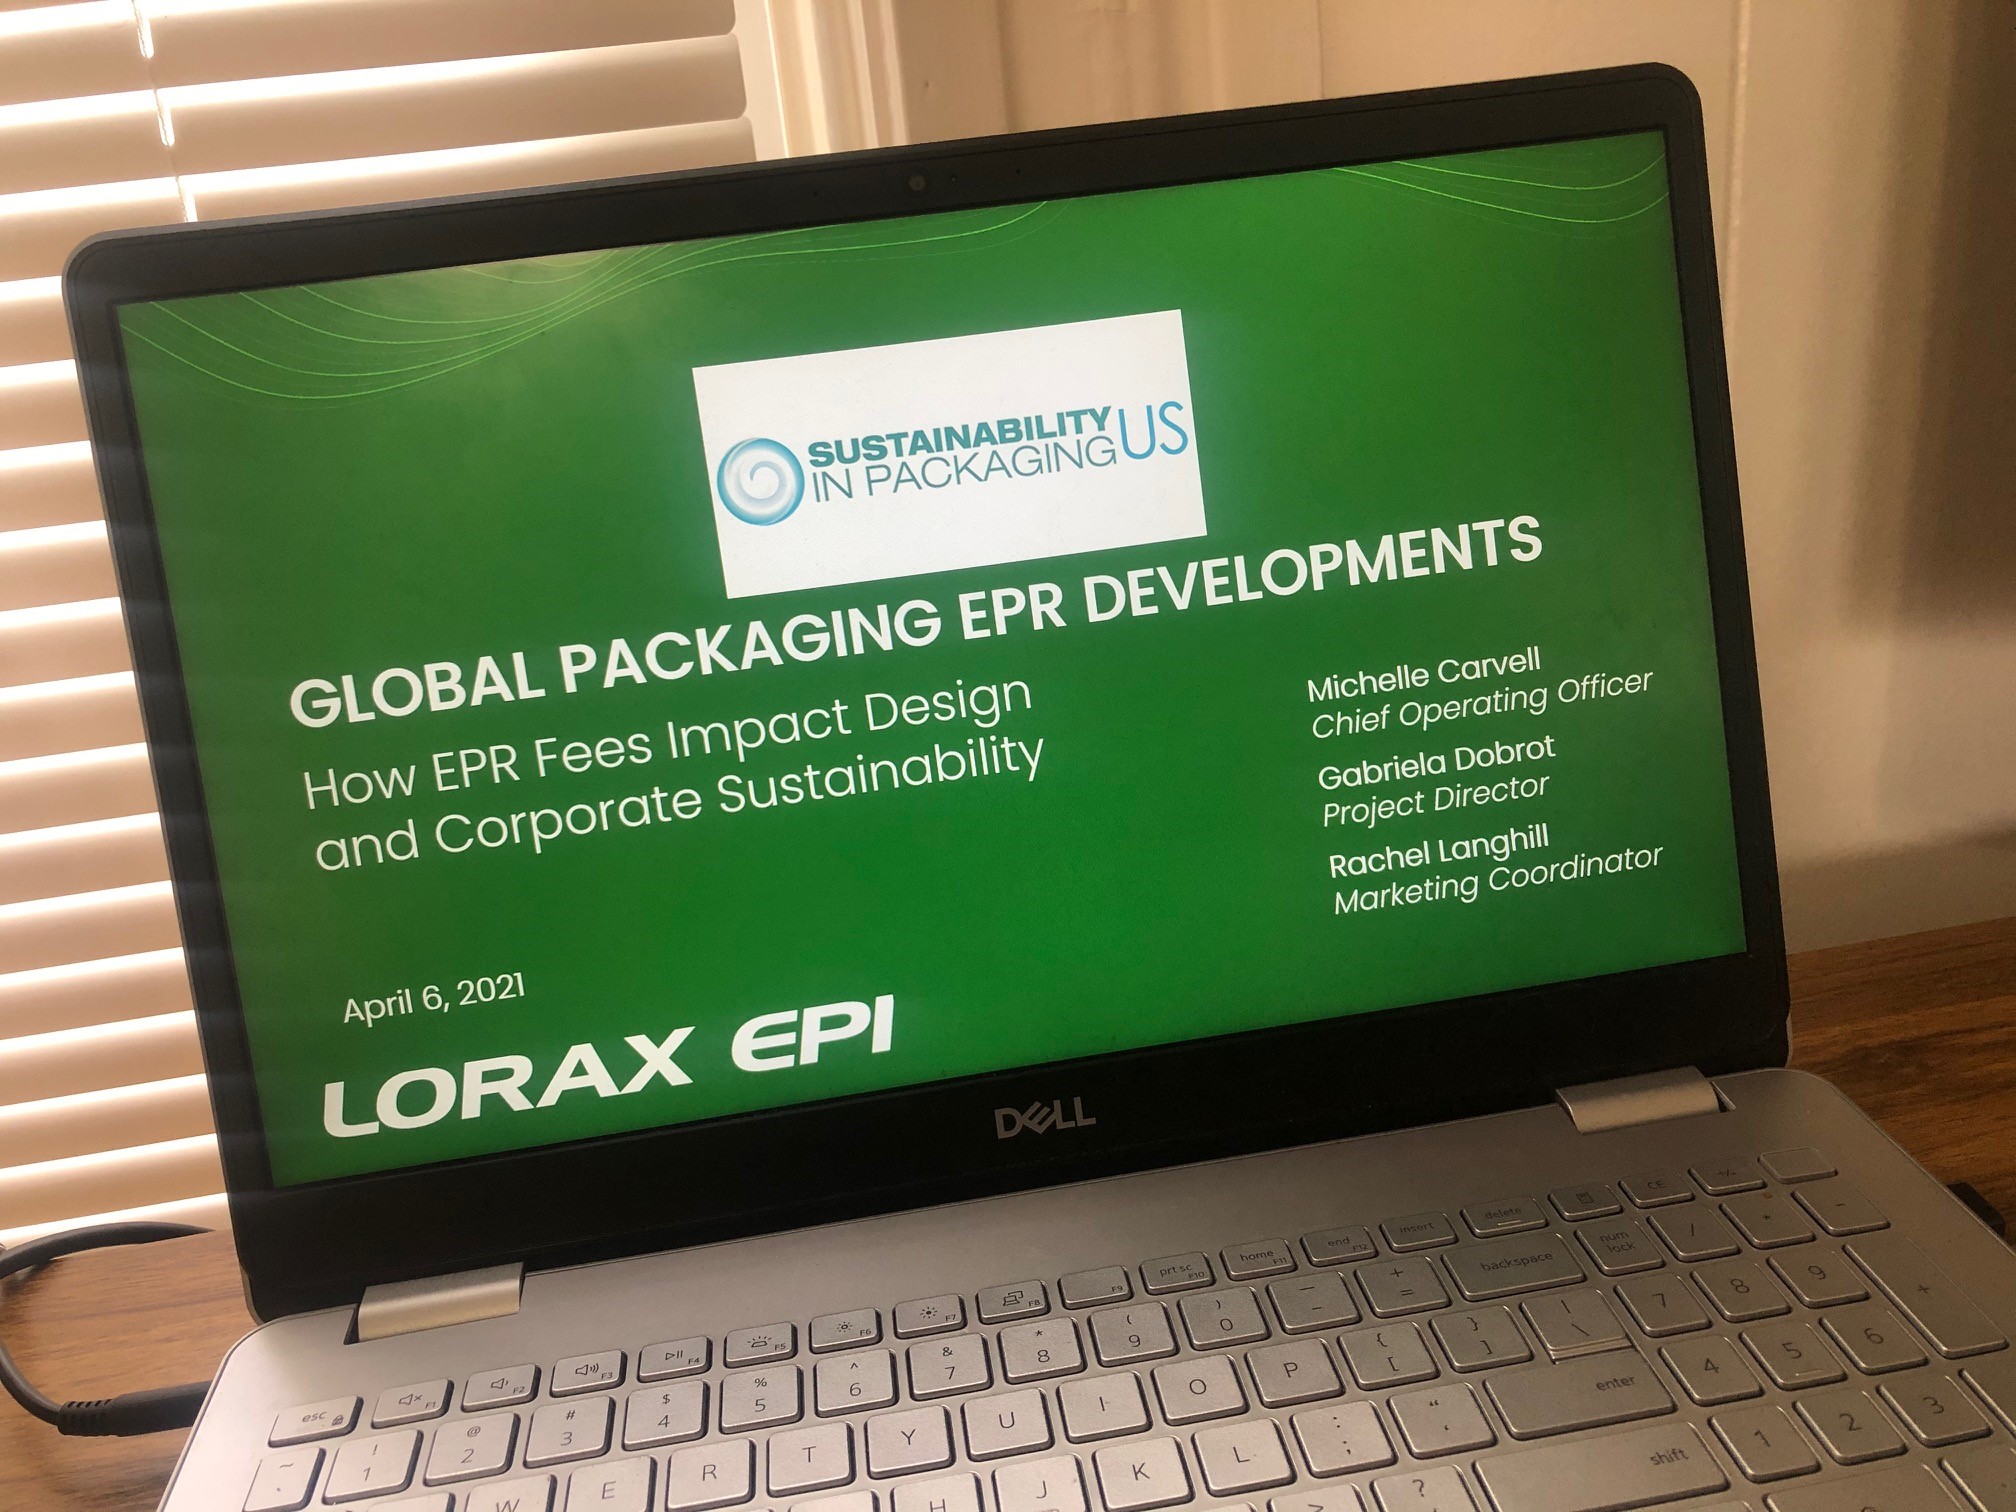 Lorax EPI's recent workshop on global packaging EPR developments